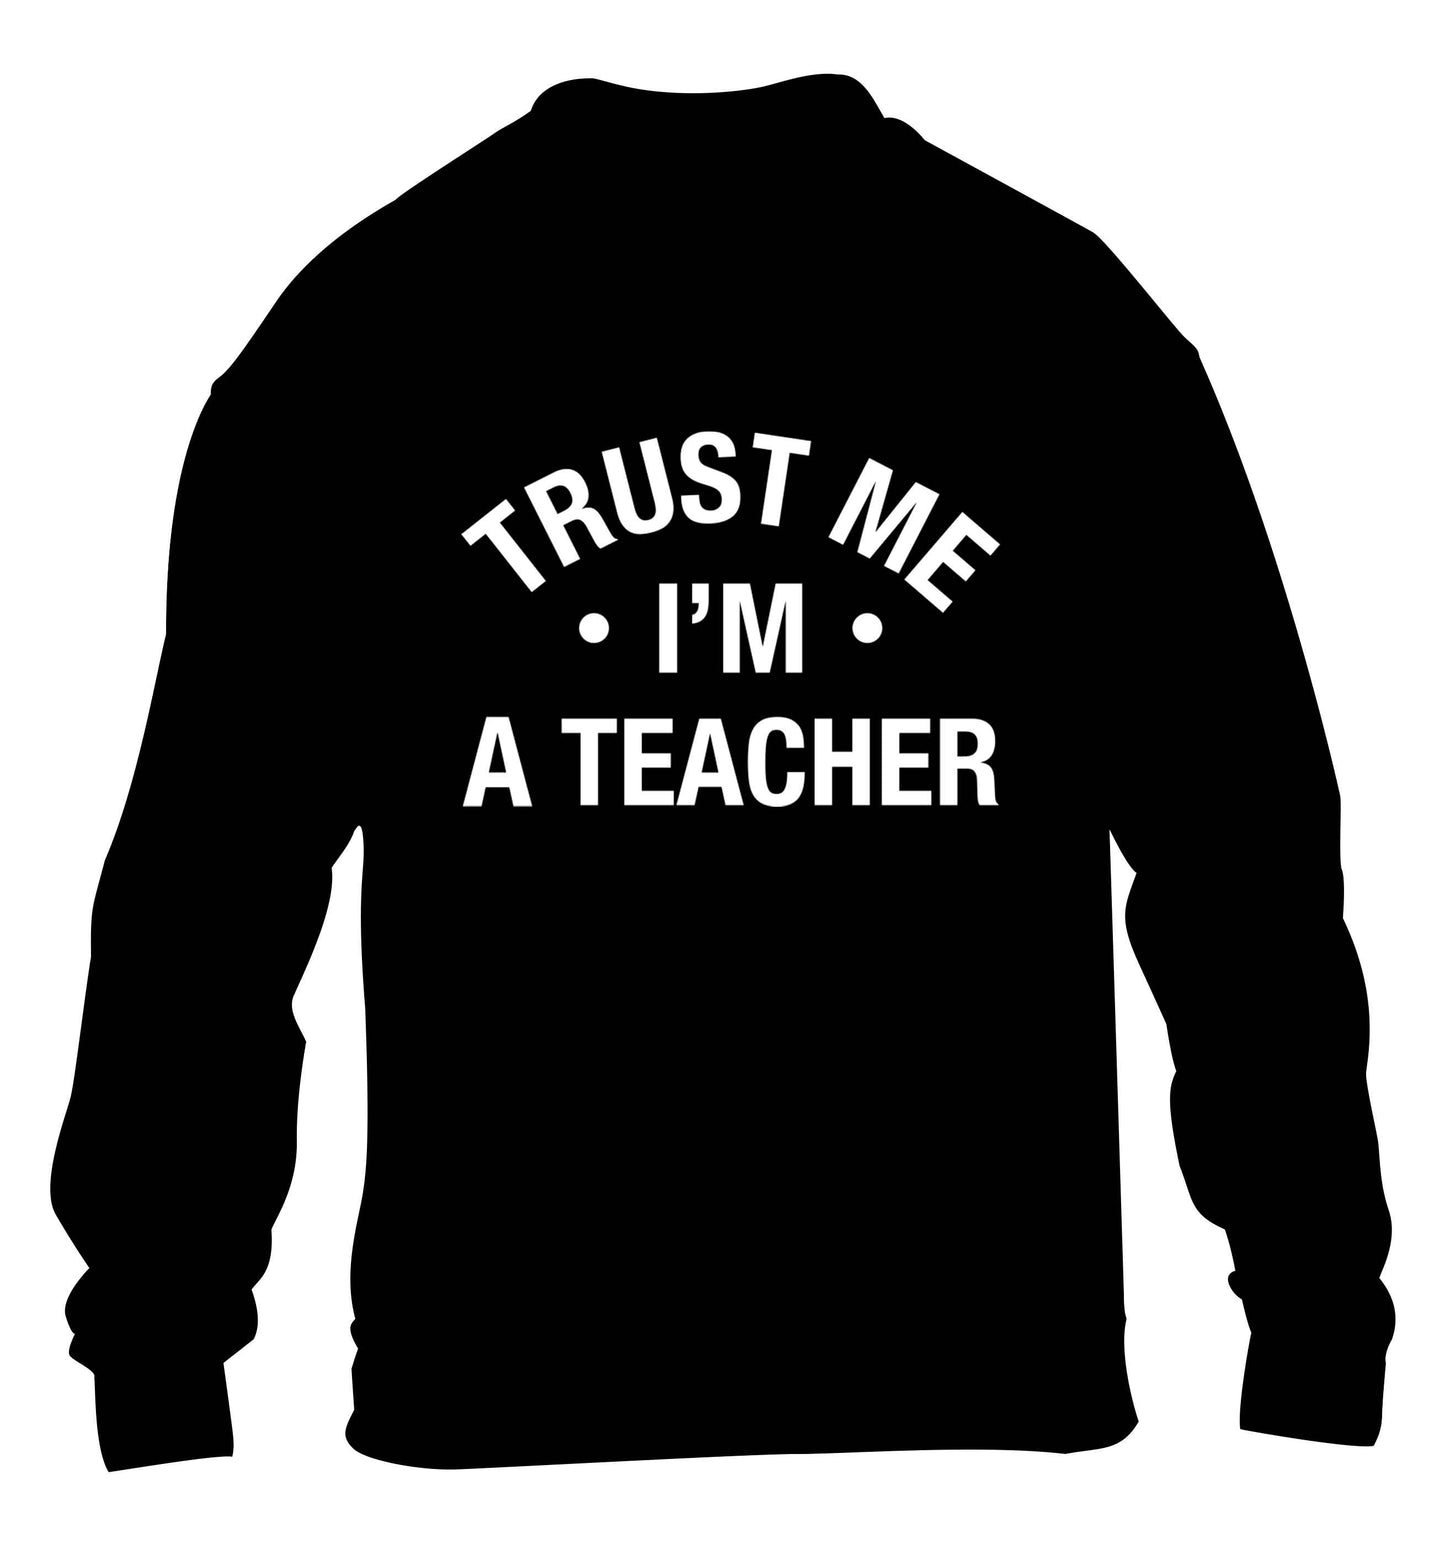 Trust me I'm a teacher children's black sweater 12-13 Years